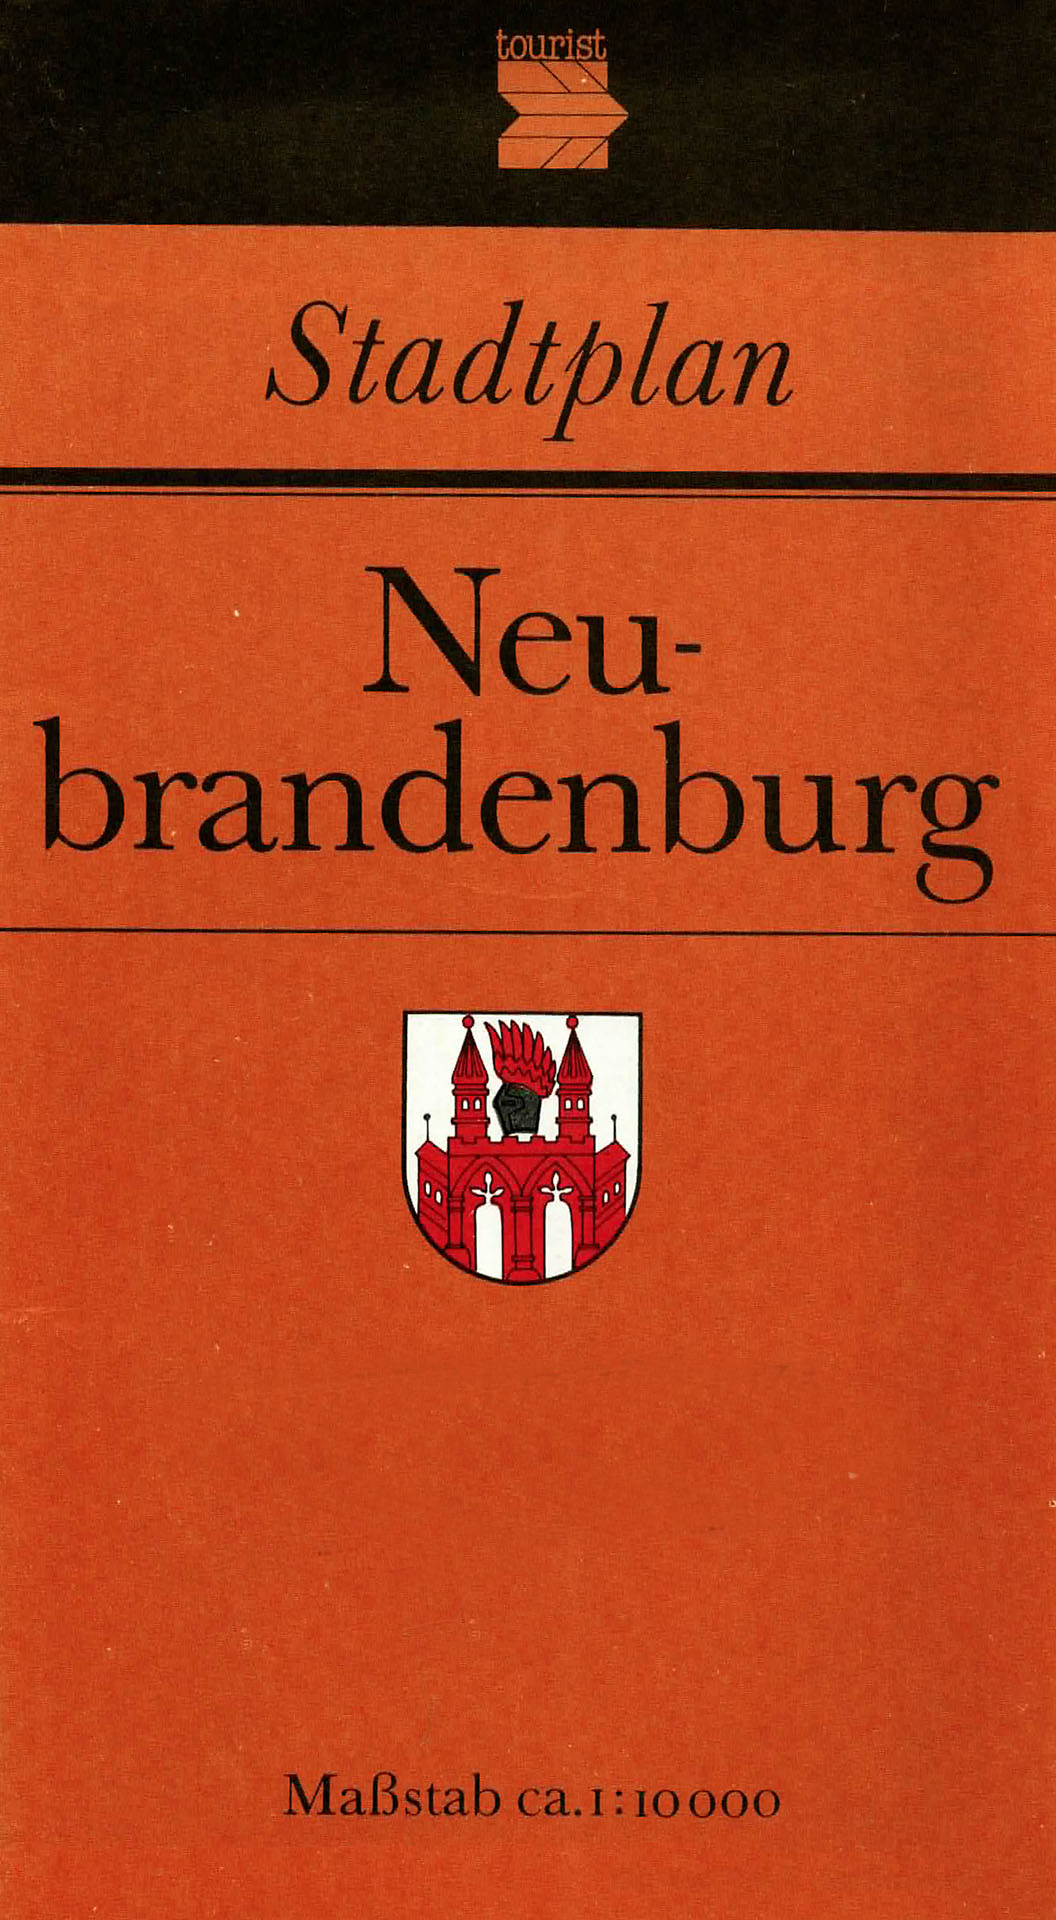 Stadtplan Neubrandenburg